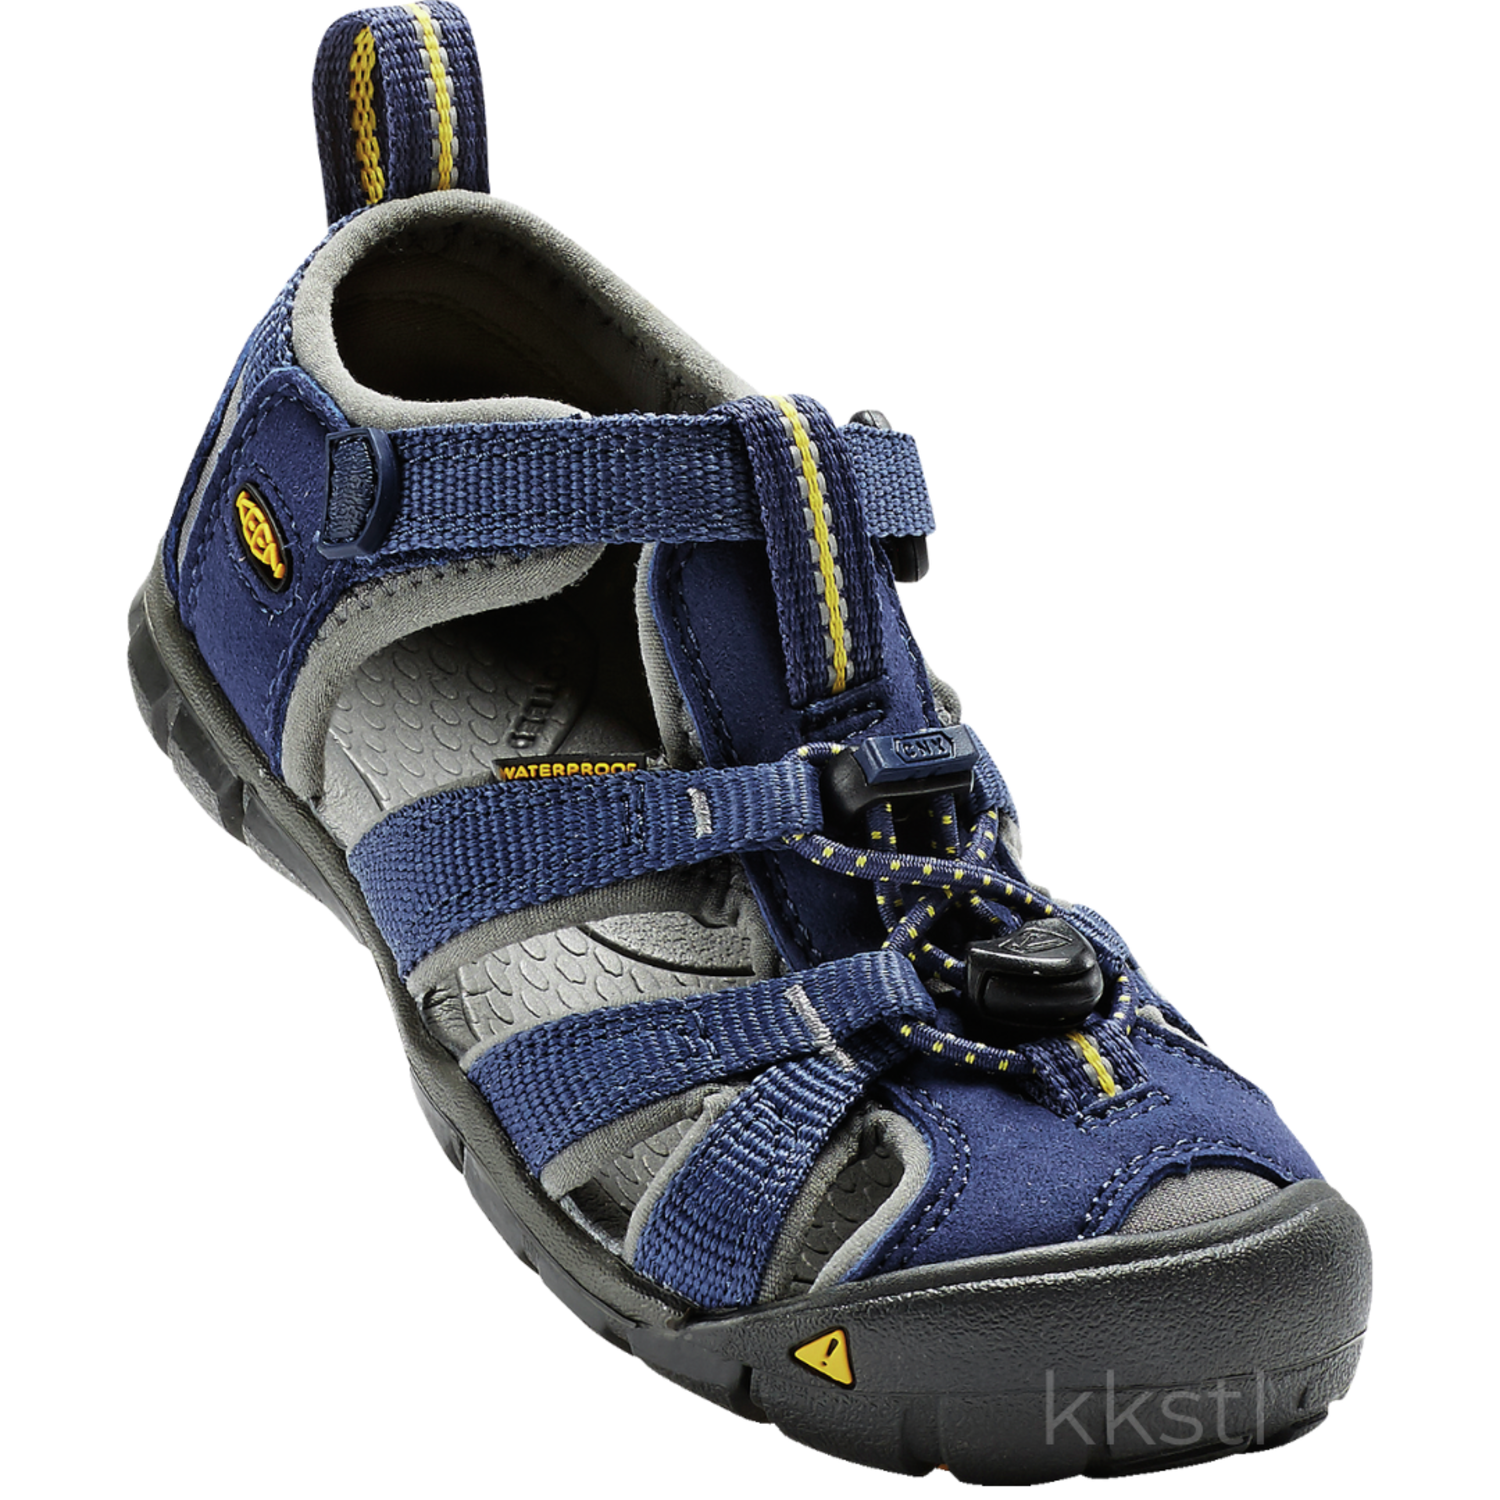 KEEN unisex-child Seacamp II CNX Water Sandal Blue Depths/ Gargoyle 13 M US Little Kid 